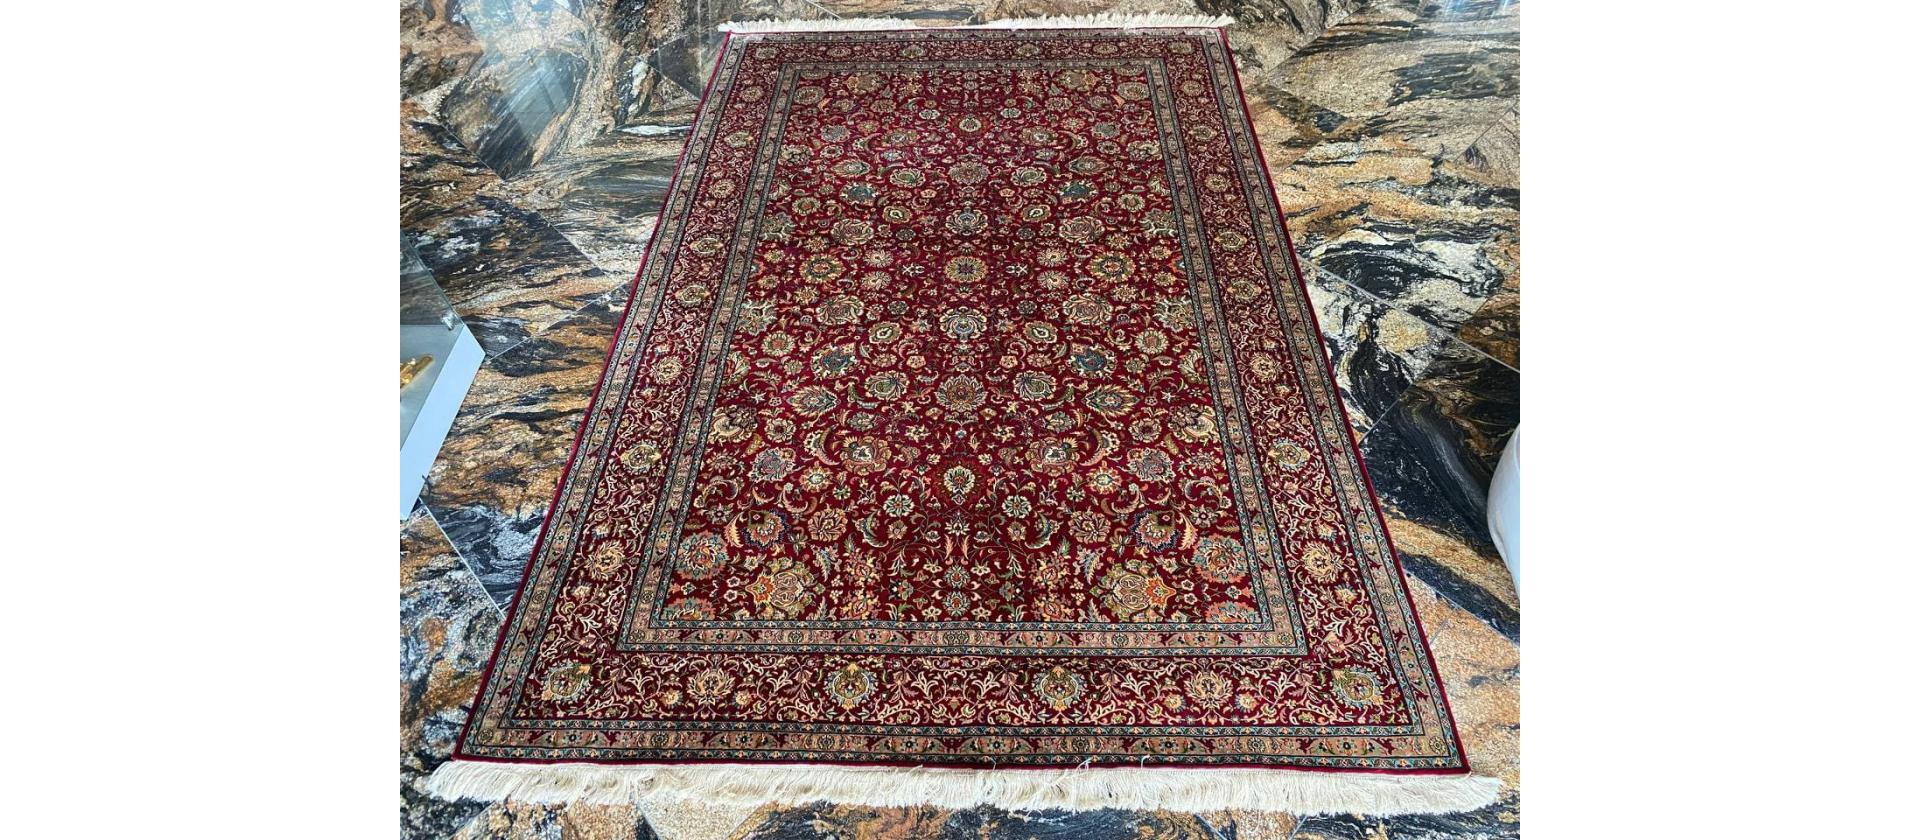 Carpet Hannans Oriental Rugs, India big